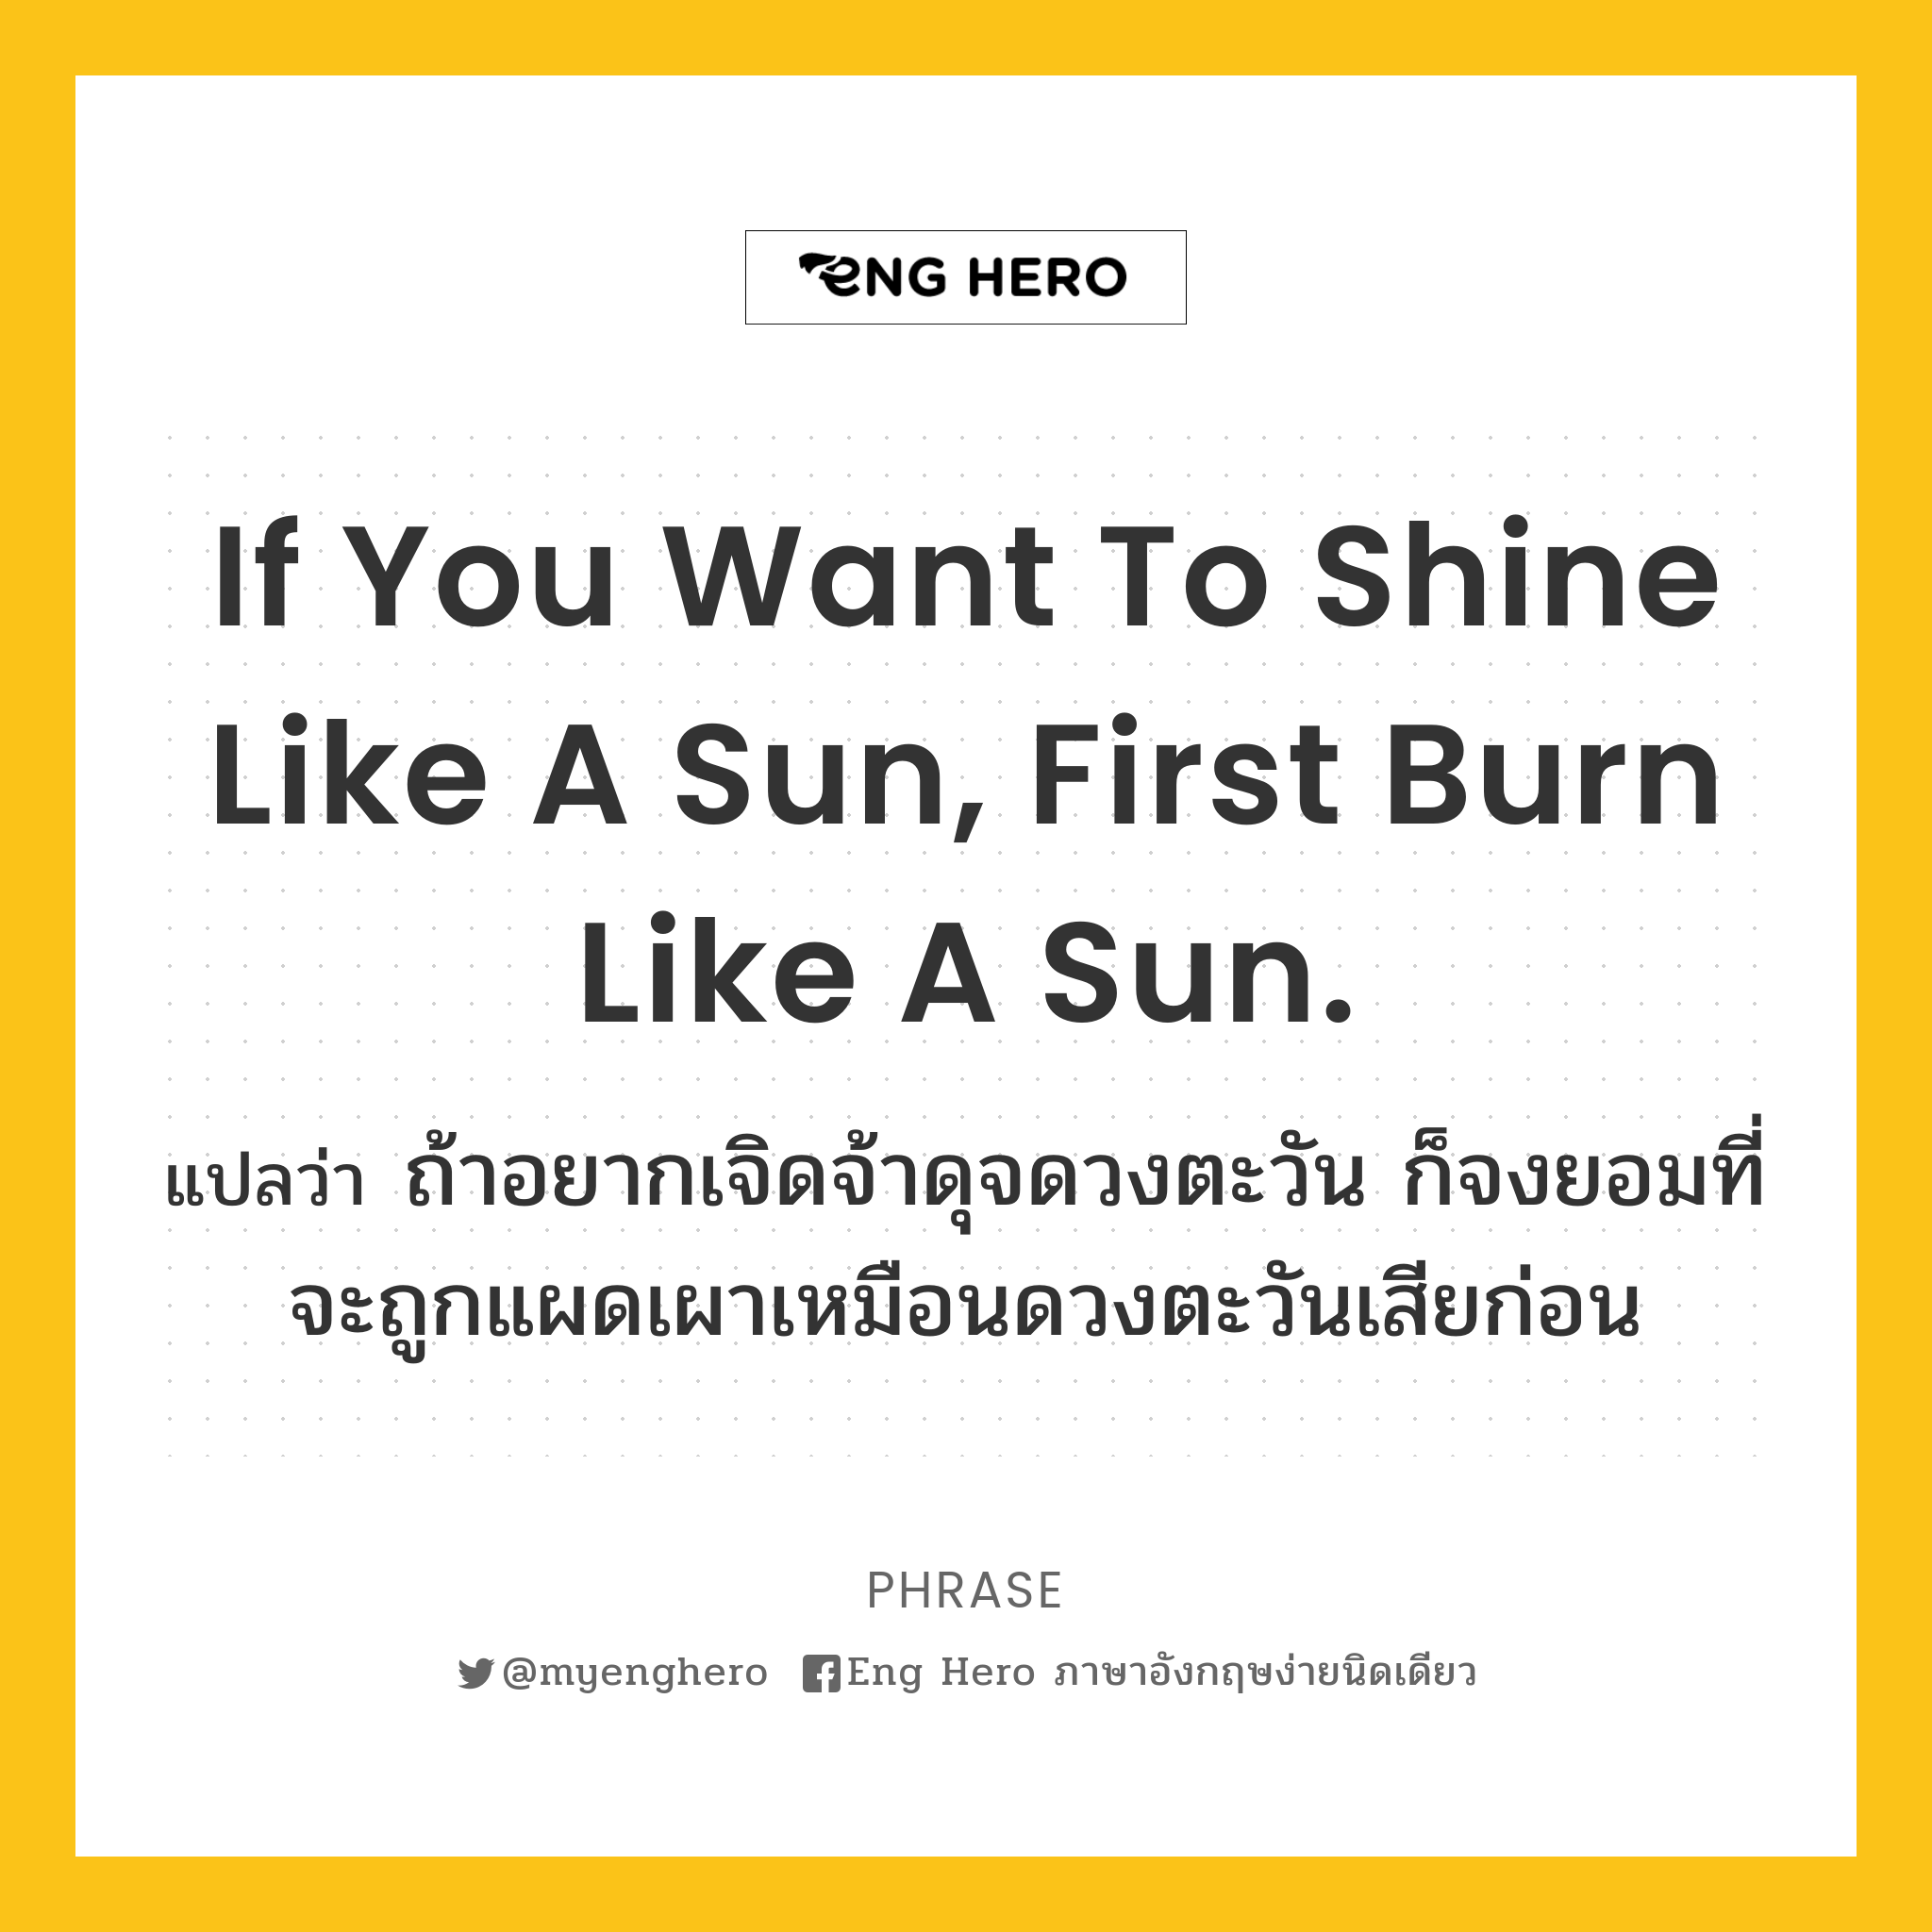 If you want to shine like a sun, first burn like a sun.